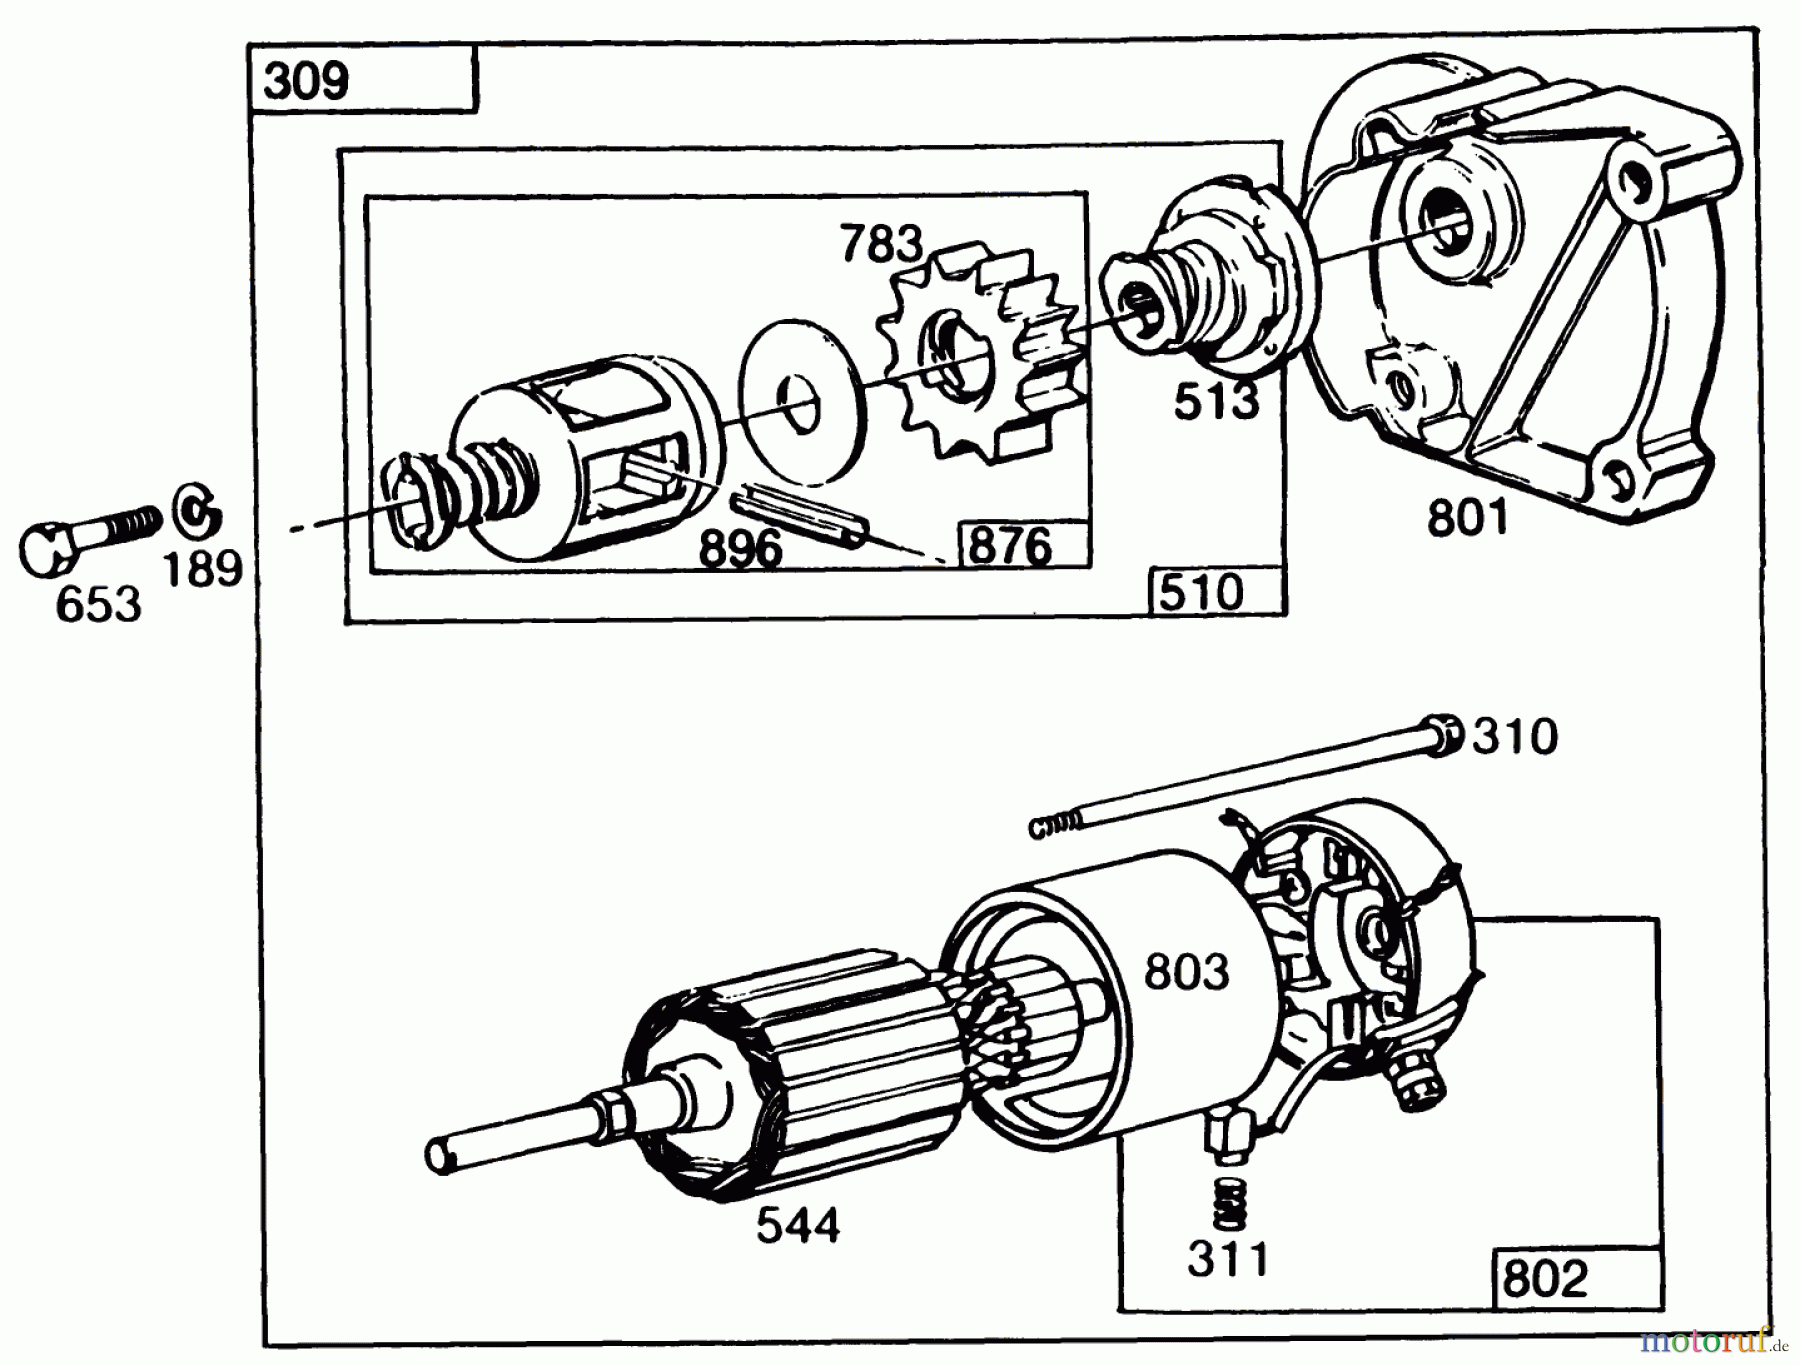  Toro Neu Mowers, Drive Unit Only 30116 - Toro Mid-Size Proline Gear Traction Unit, 16 hp, 1987 (7000001-7999999) ENGINE BRIGGS AND STRATTON MODEL NO. 402707-0158-01